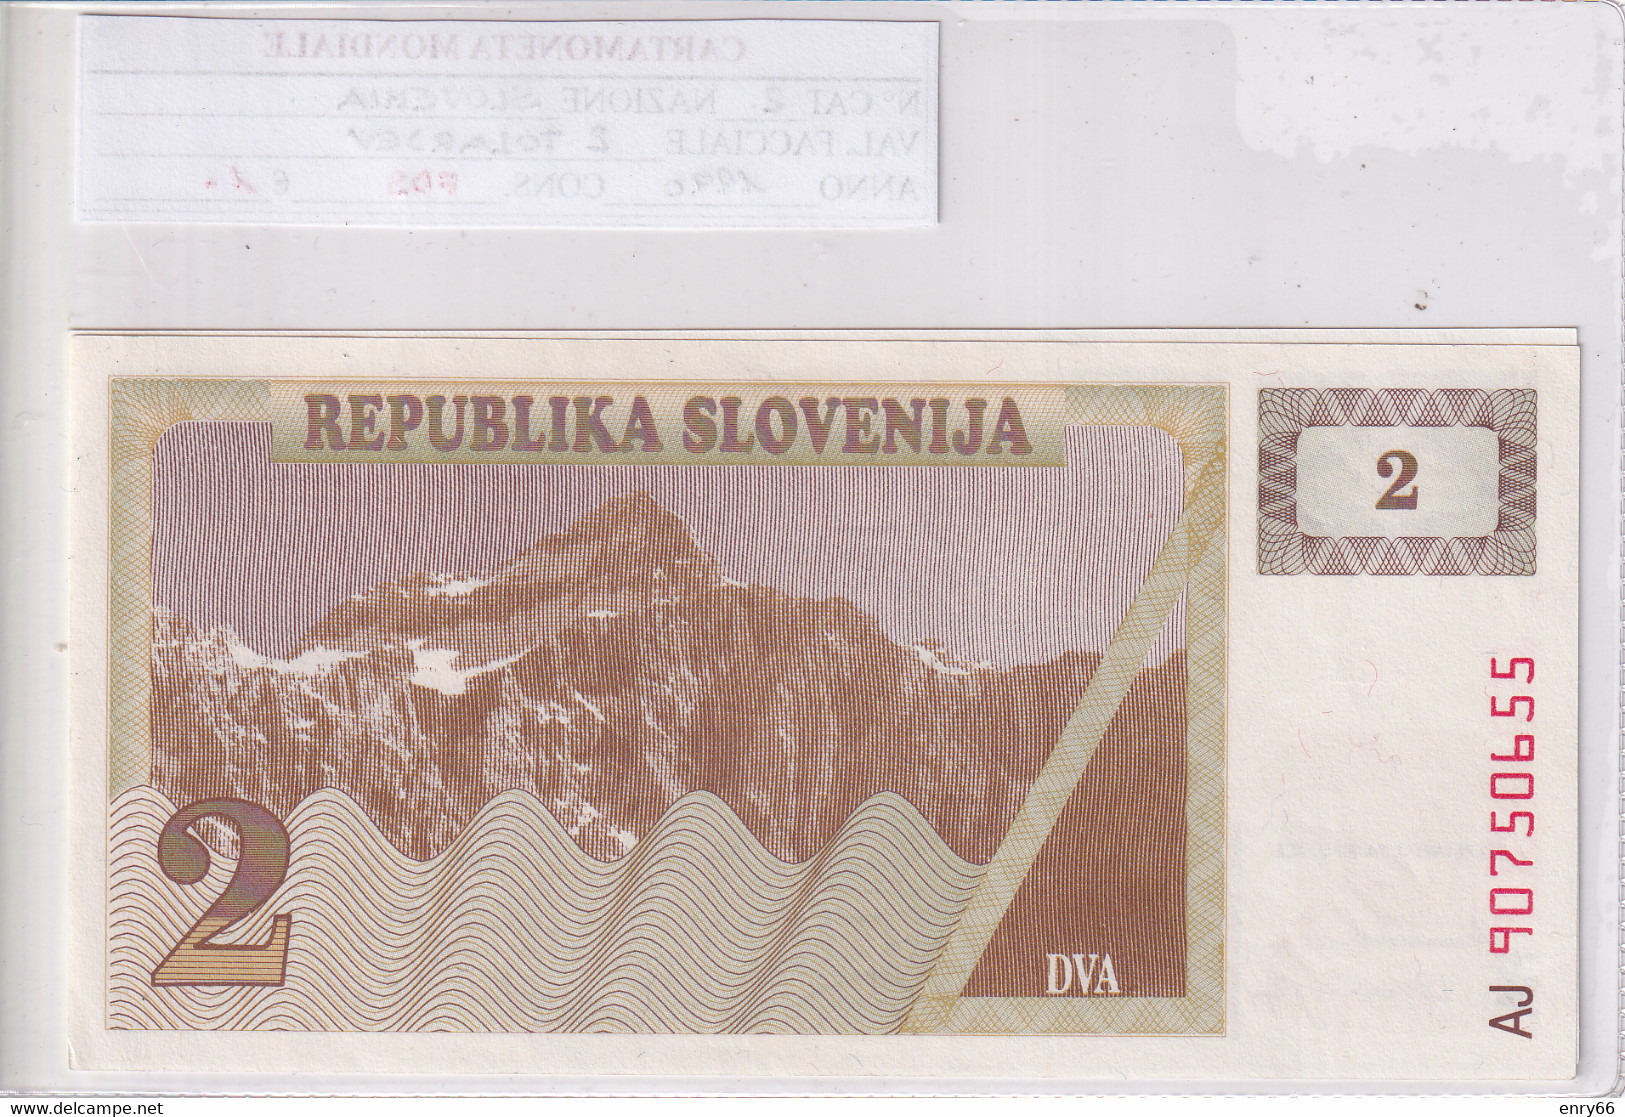 SLOVENIA 2 TOLARJEV 1990 P2 - Slovénie